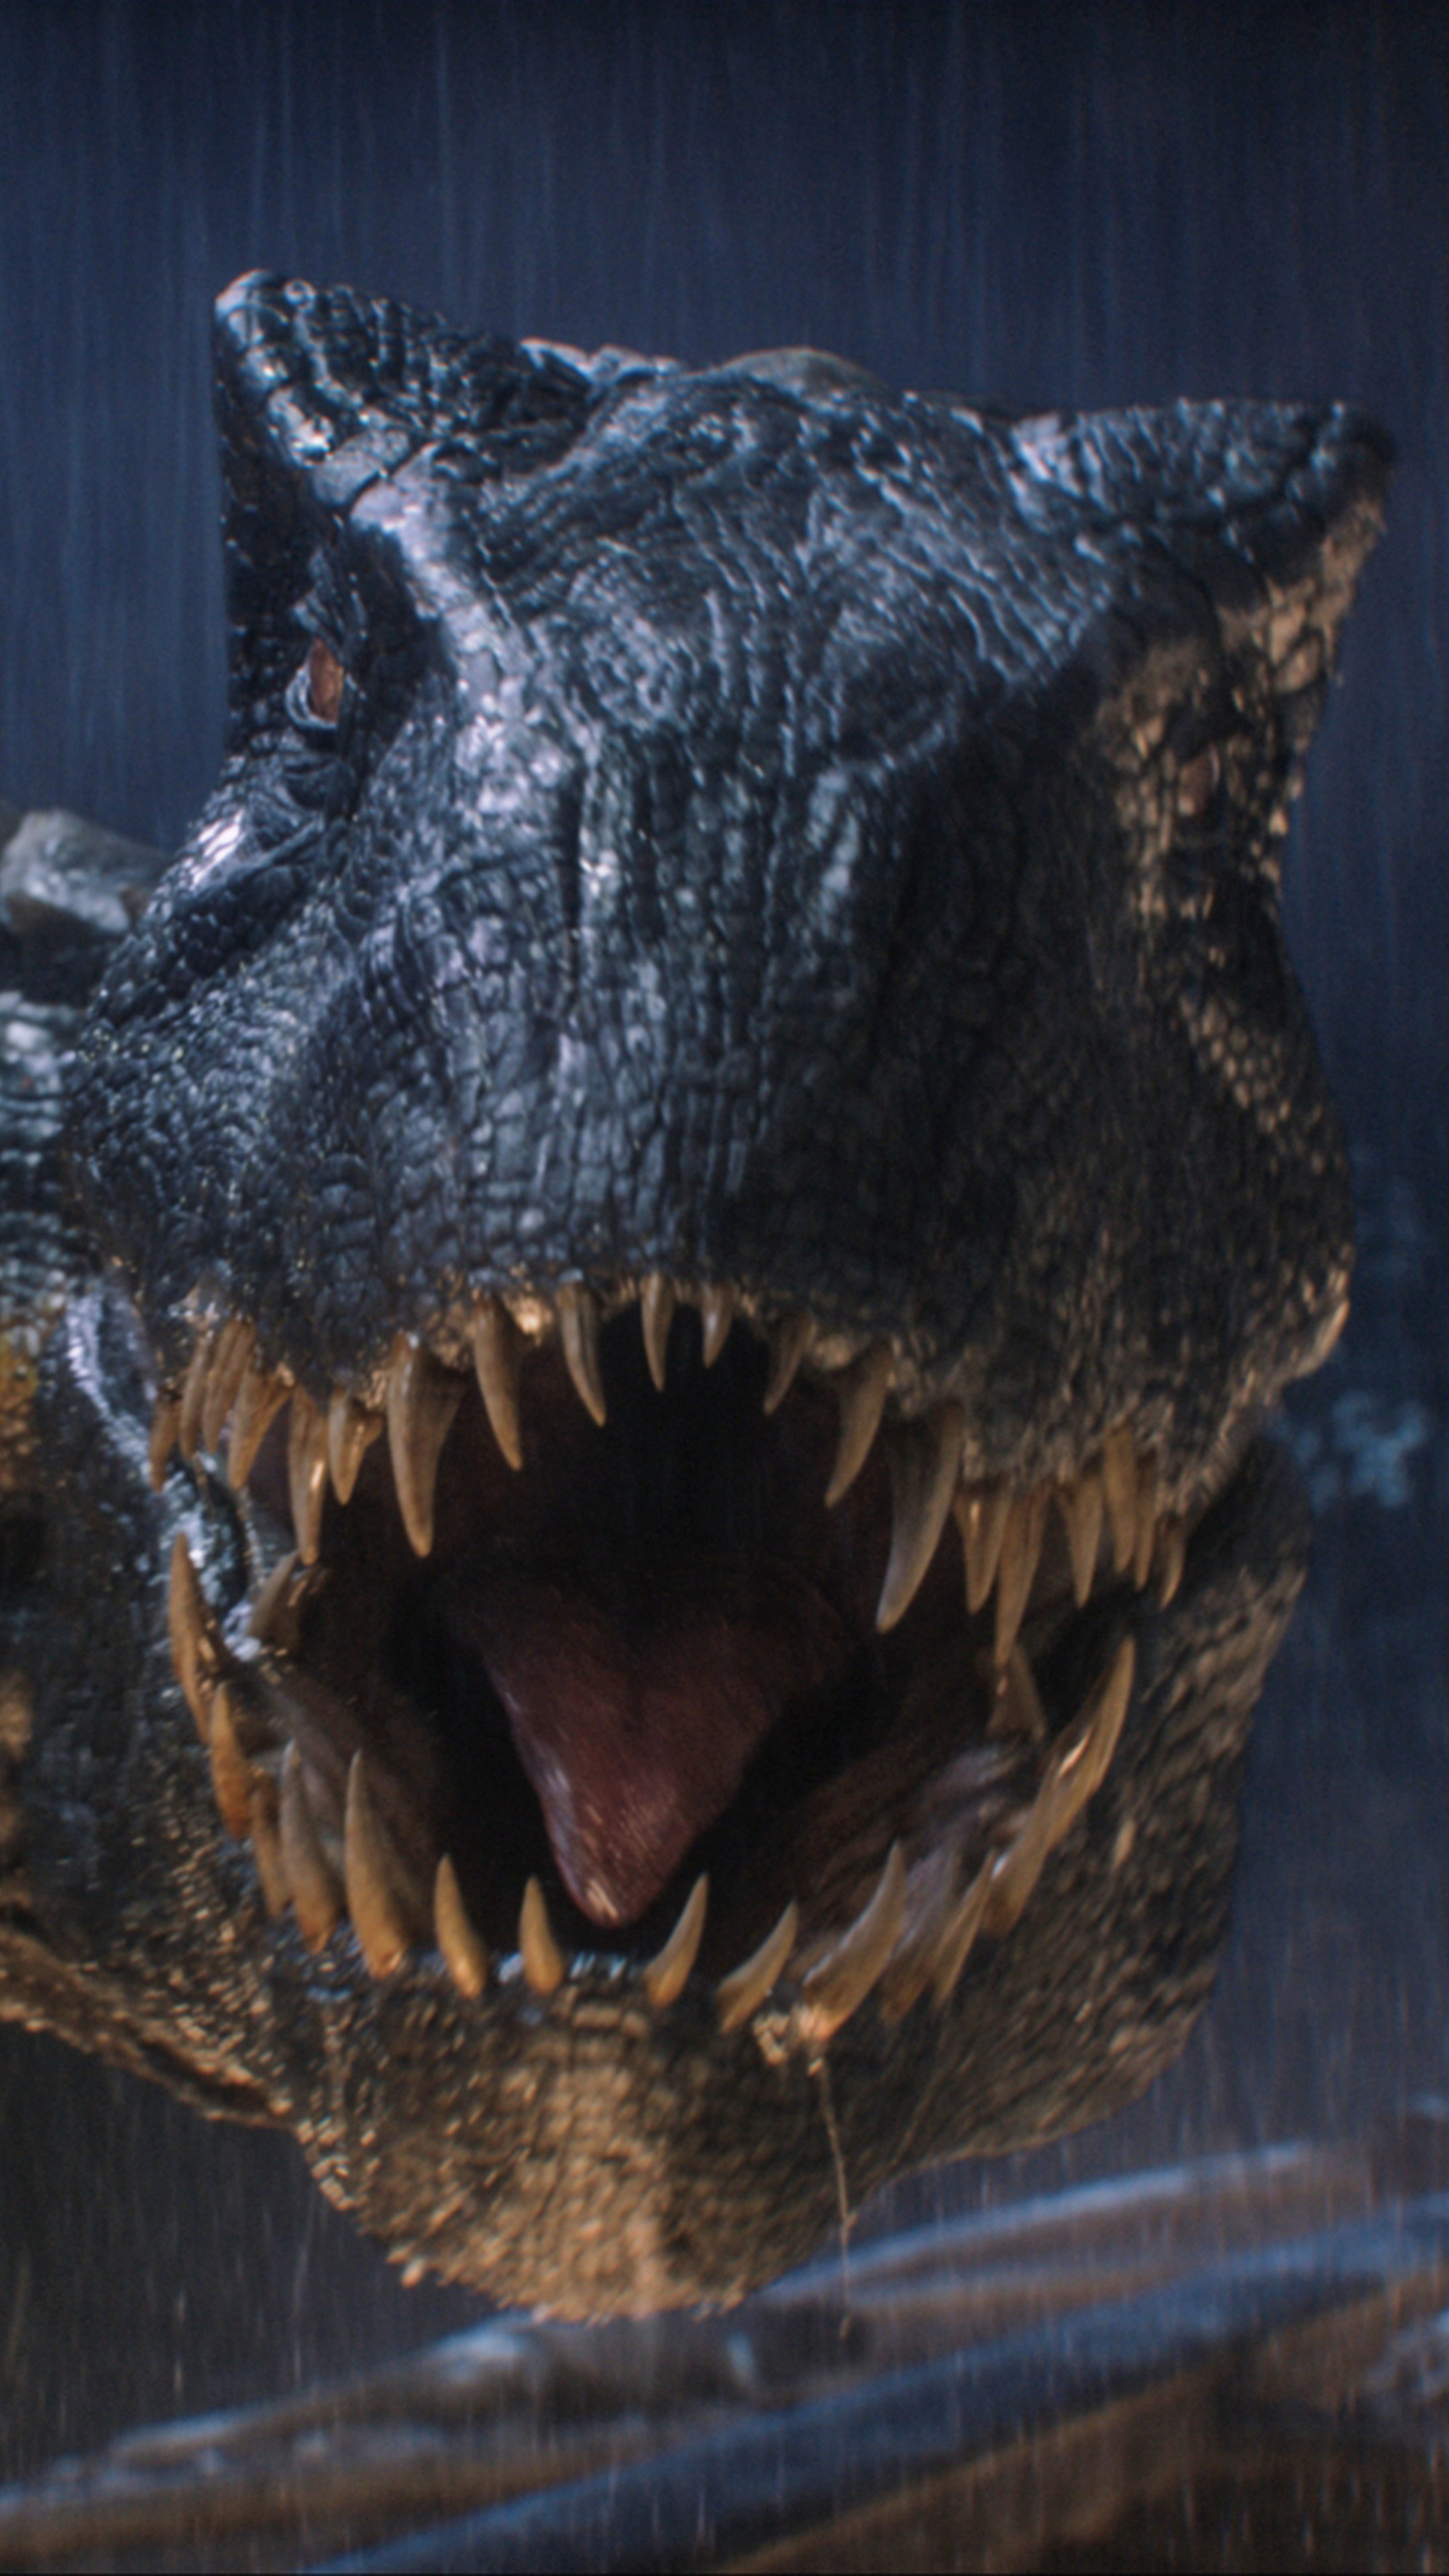 Jurassic World dinosaur, Fallen Kingdom sequel, Sony Xperia wallpaper, 4K display, 2160x3840 4K Handy